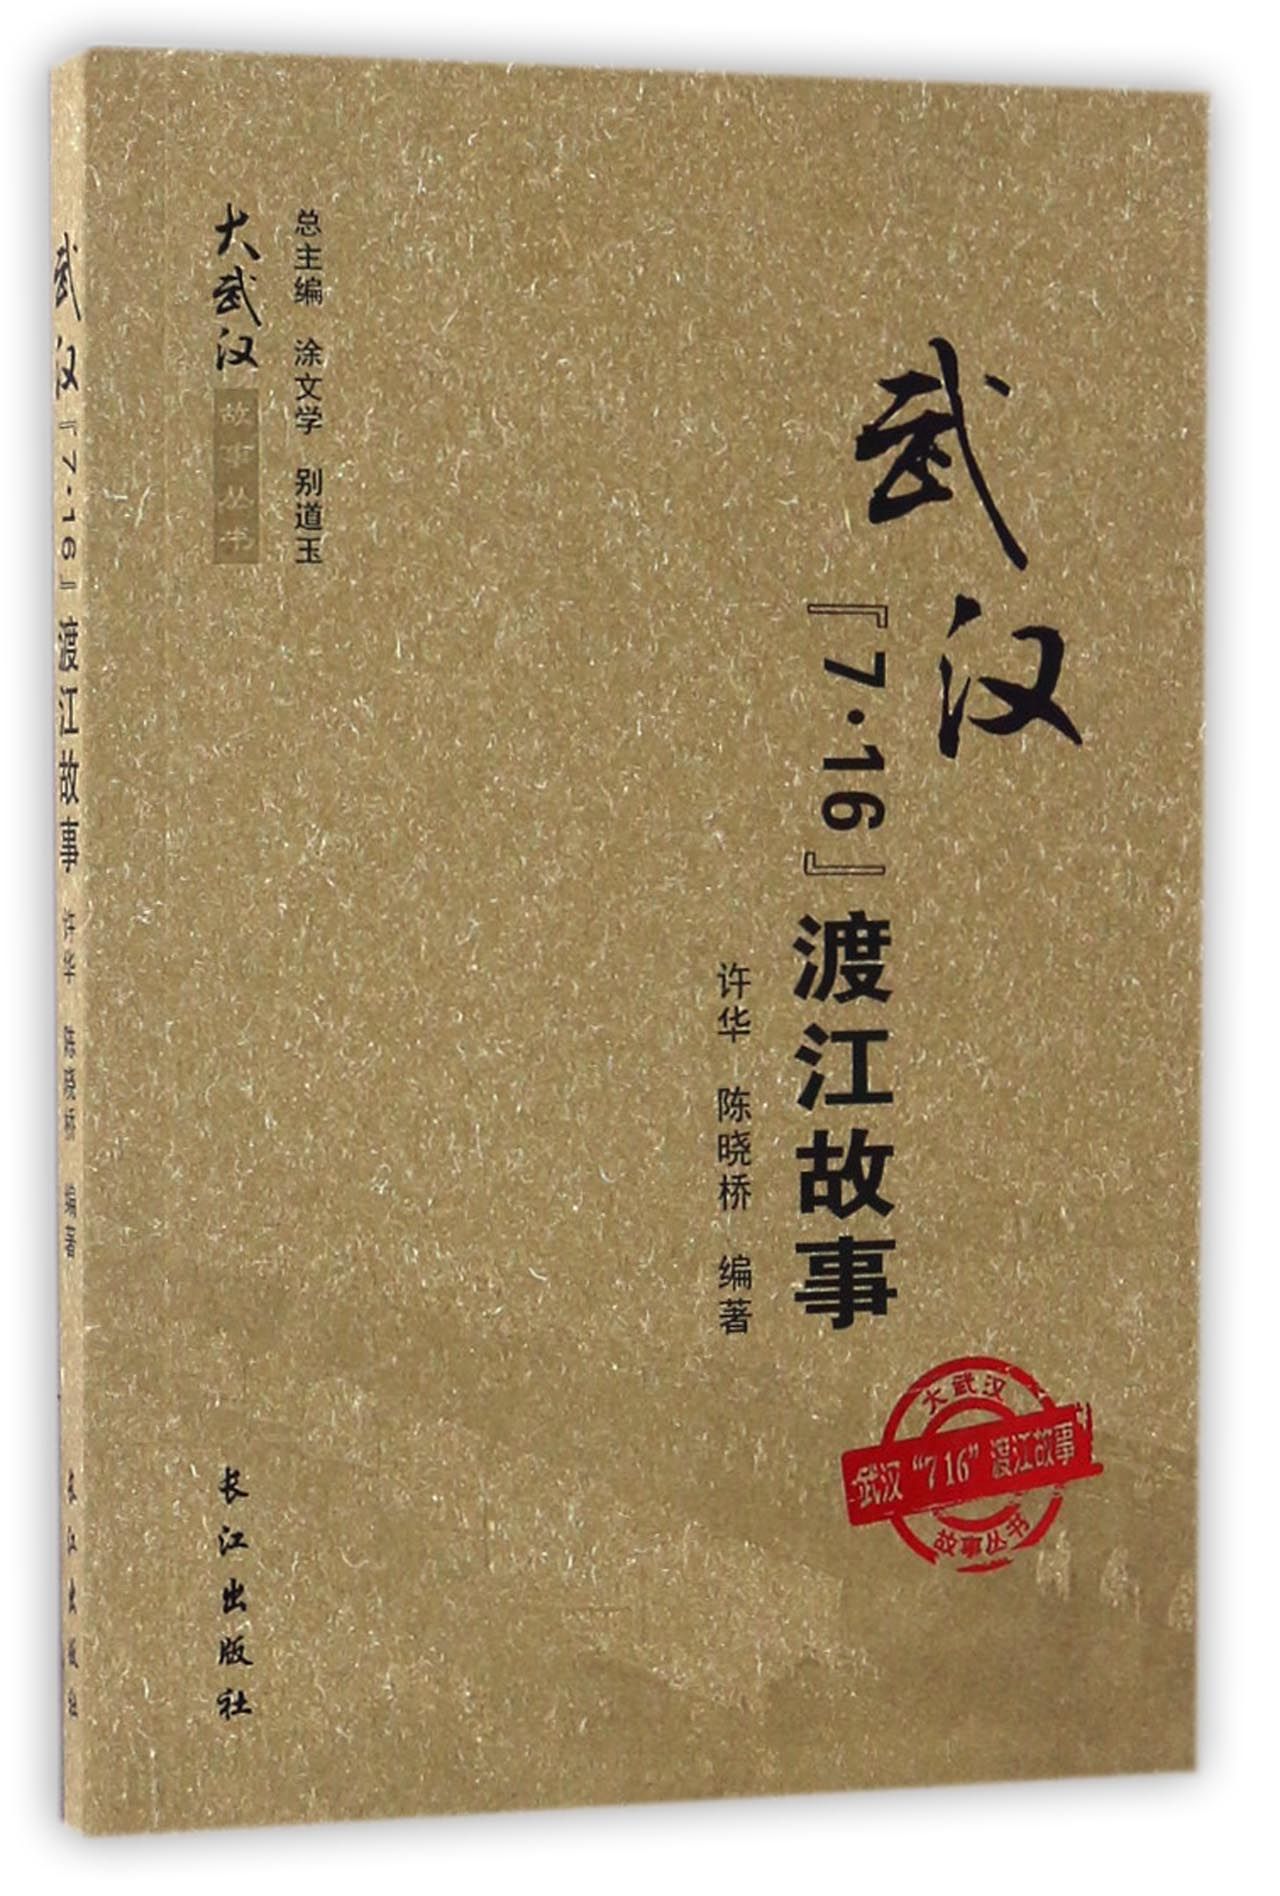 BK 武汉7·16渡江故事/大武汉故事丛书 环境科学 长江出版社